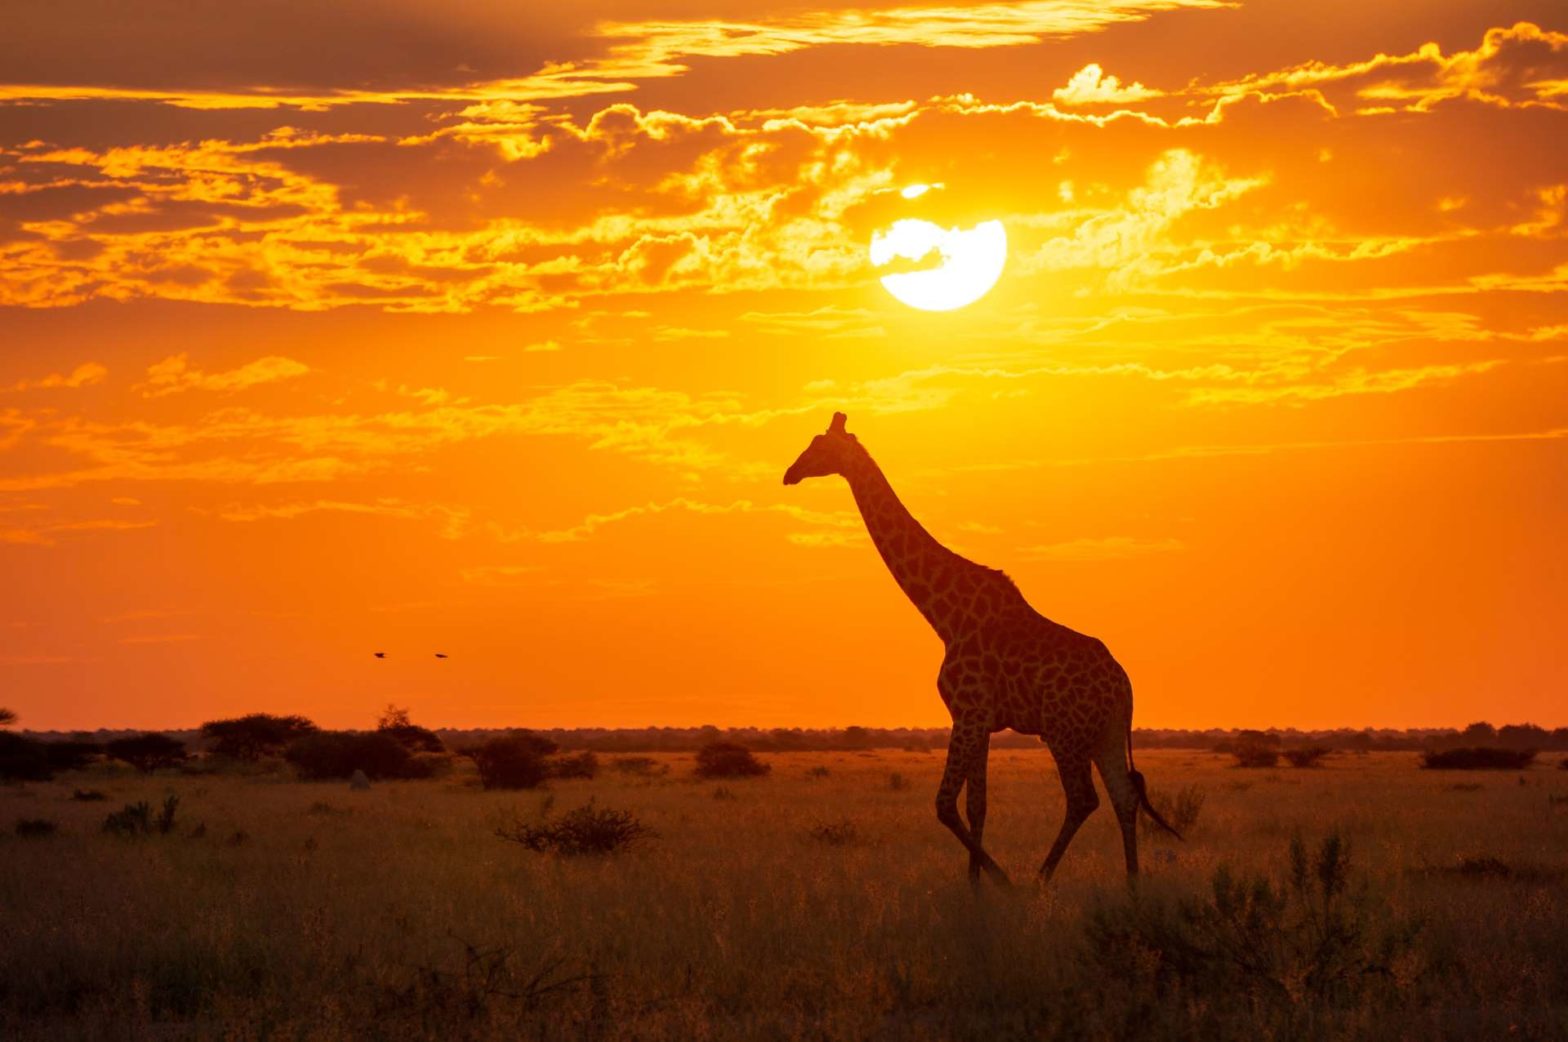 Giraffe and sunset in Nxai Pan National Park